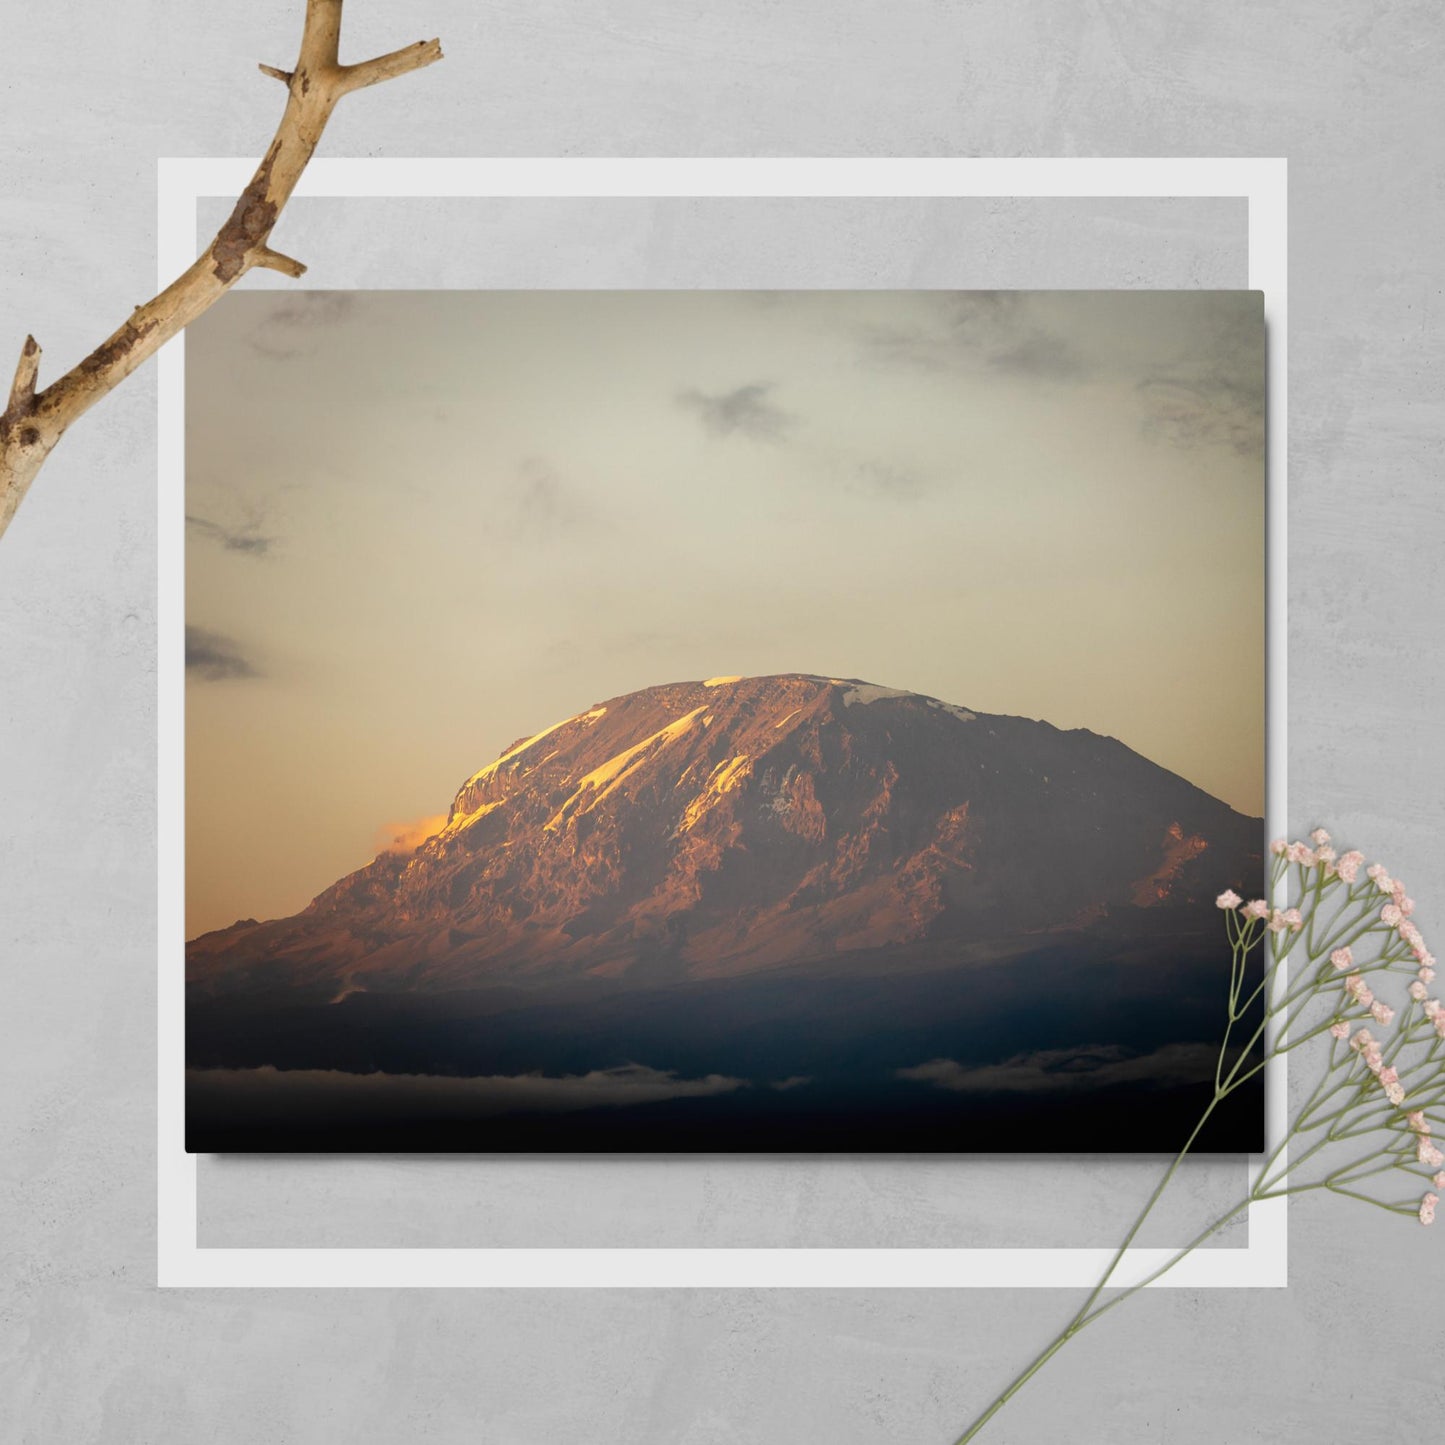 Sunset on Mt. Kilimanjaro - Metal prints